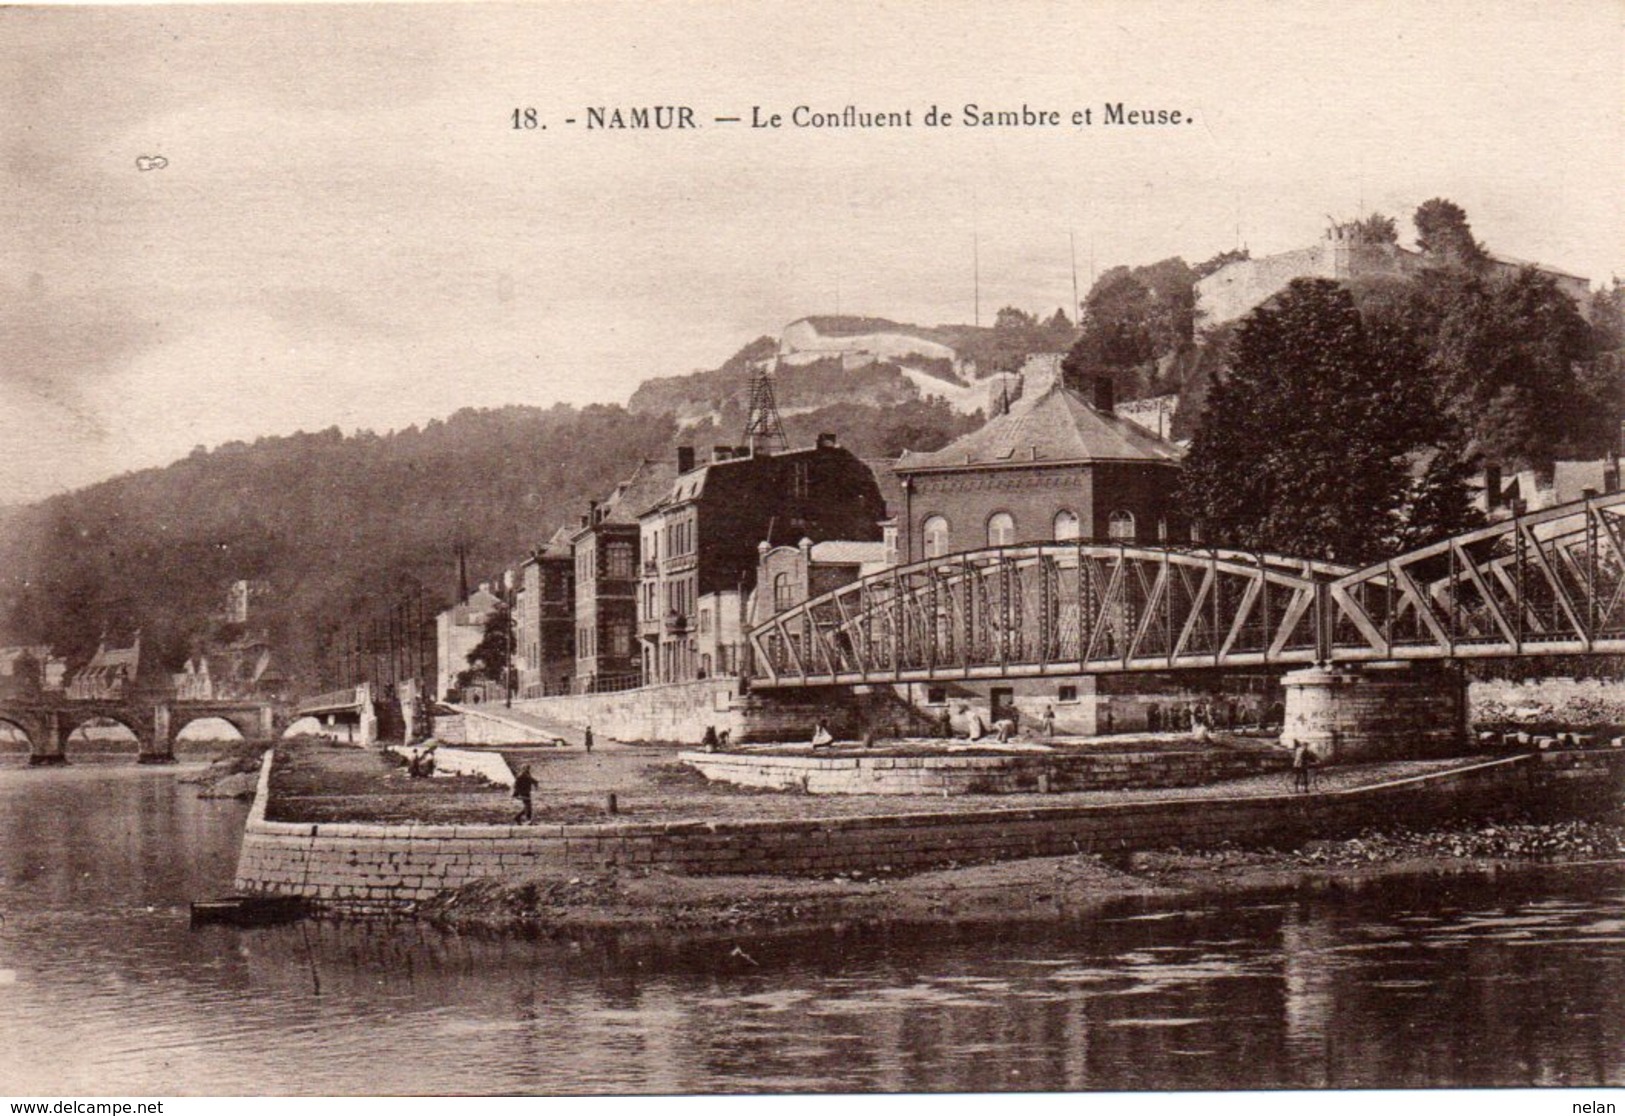 NAMUR-LE CONFLUENT DE SAMBRE ET MEUSE-ANNI 1920-NON VIAGGIATA - Namur